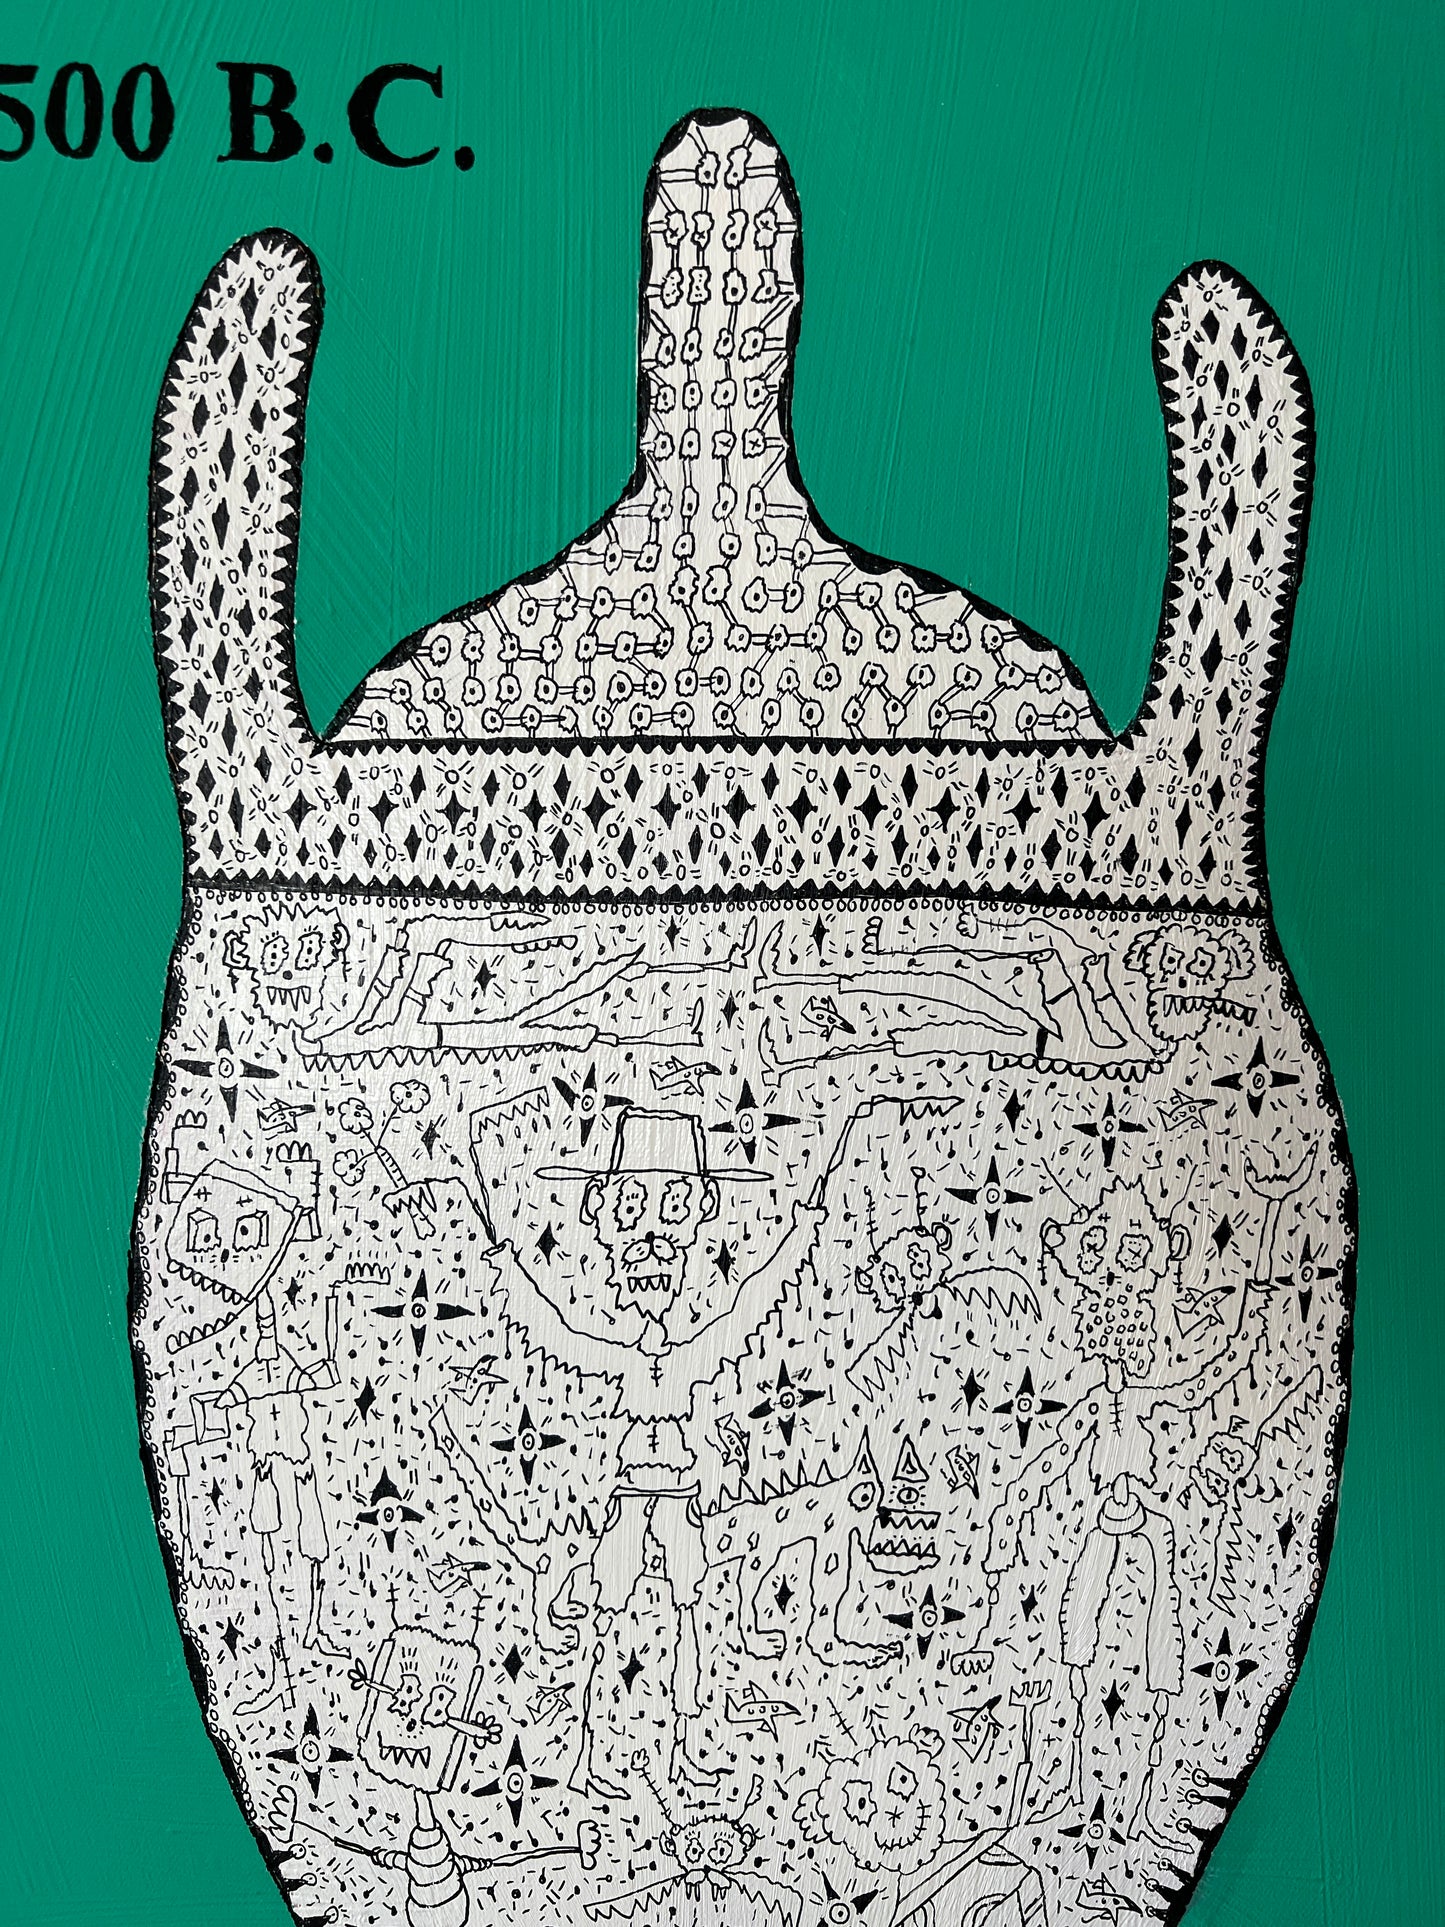 Terracotta Panathenaic prize amphora Painting